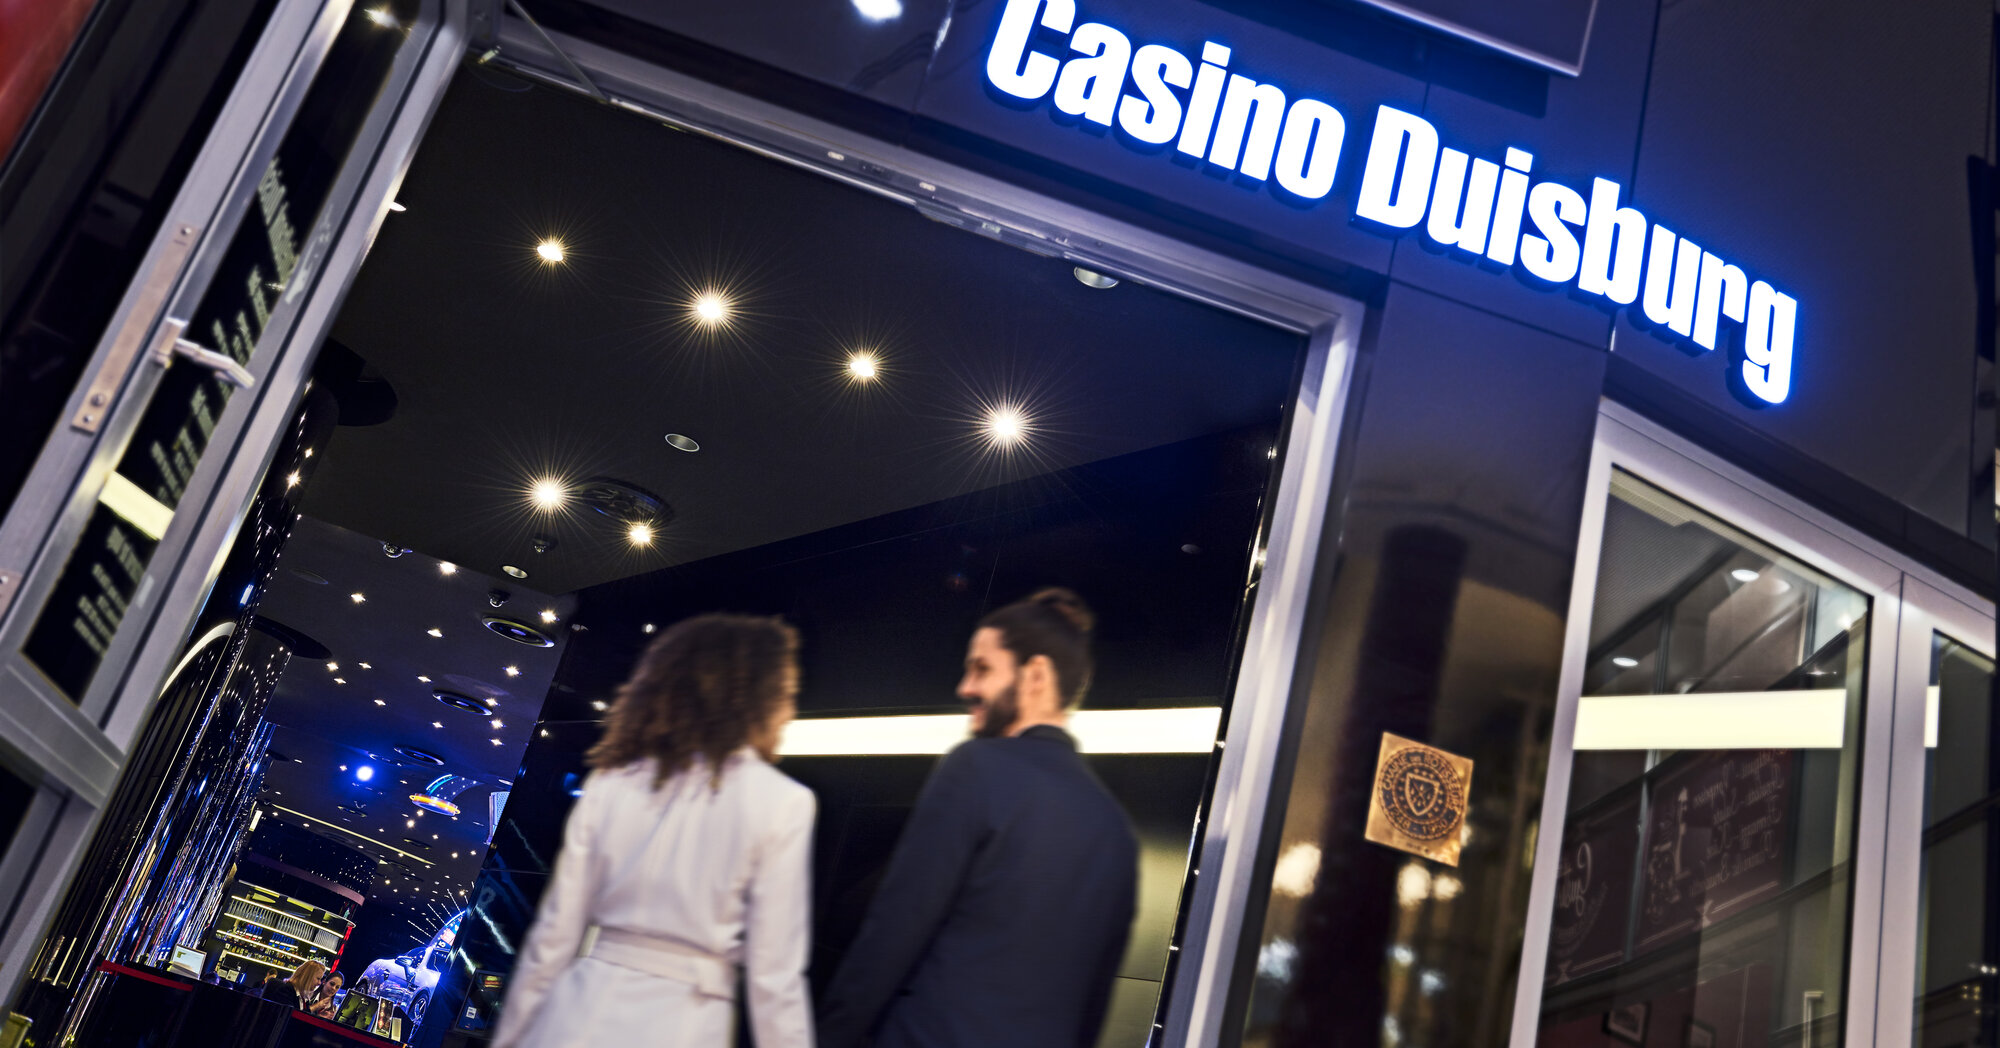 (c) Casino-duisburg.de